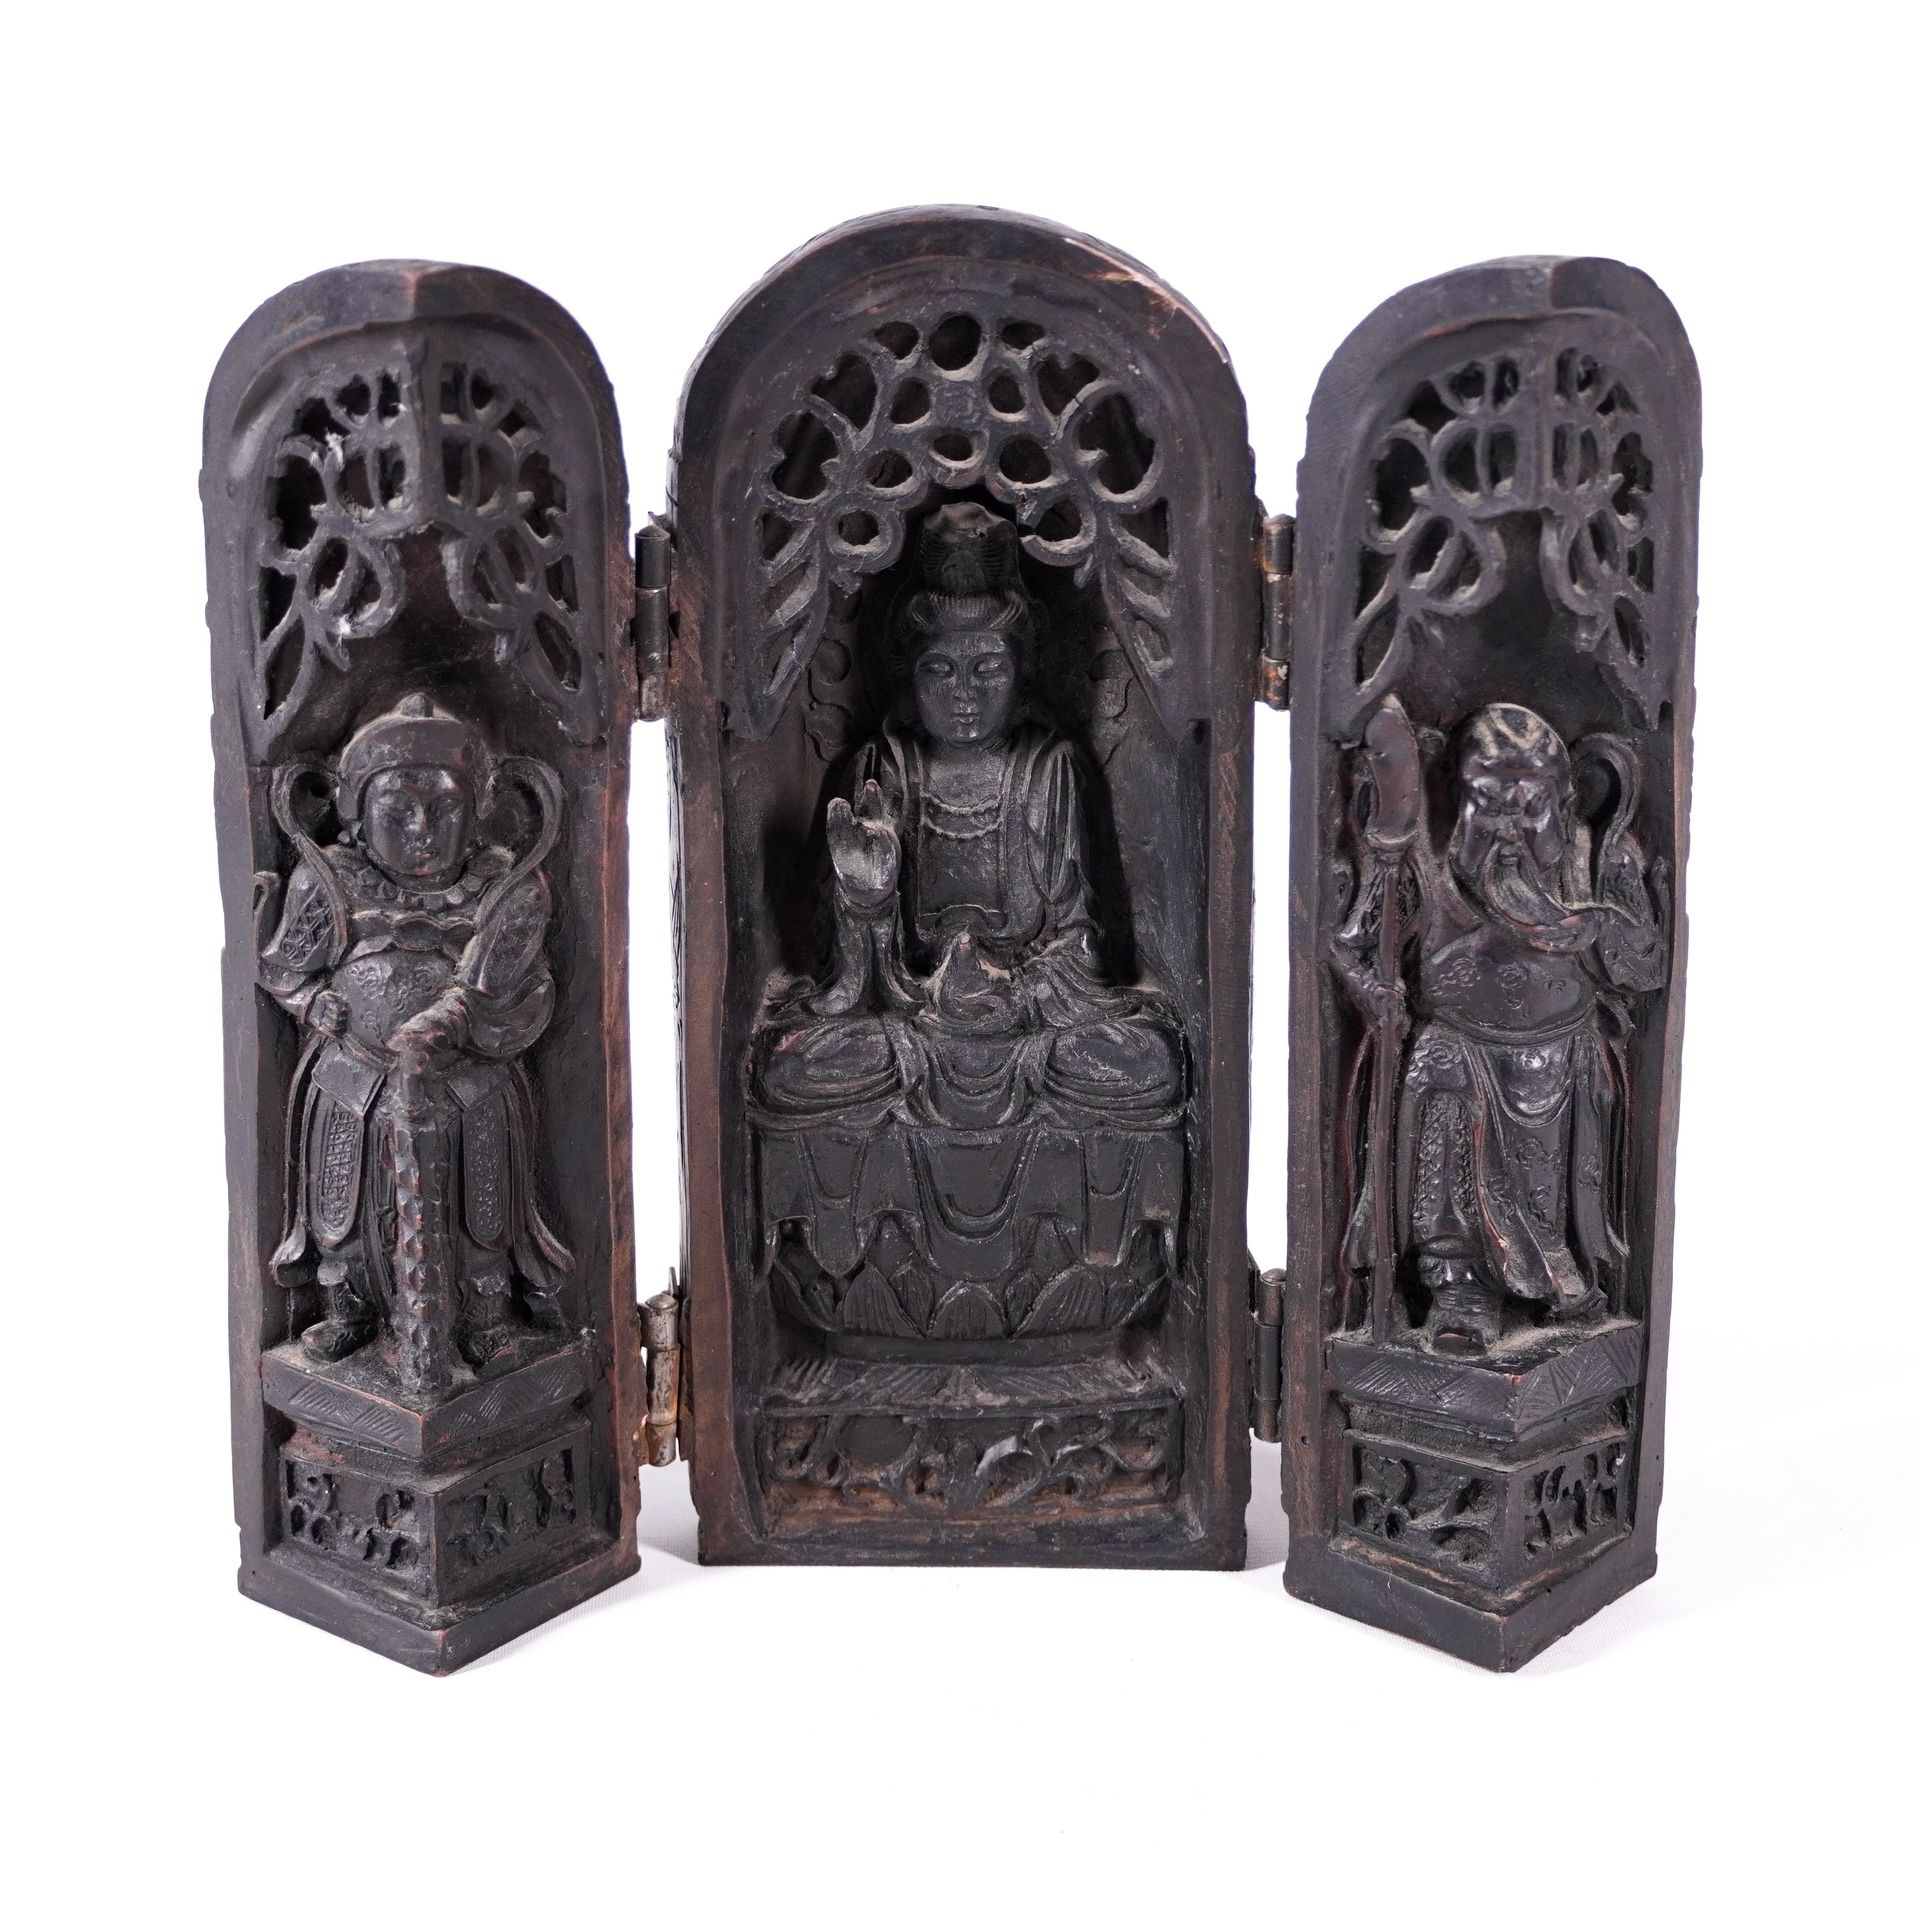 7" Foldable Indian Buddha Godhead God Figurine Statue Sculpture Artwork Art